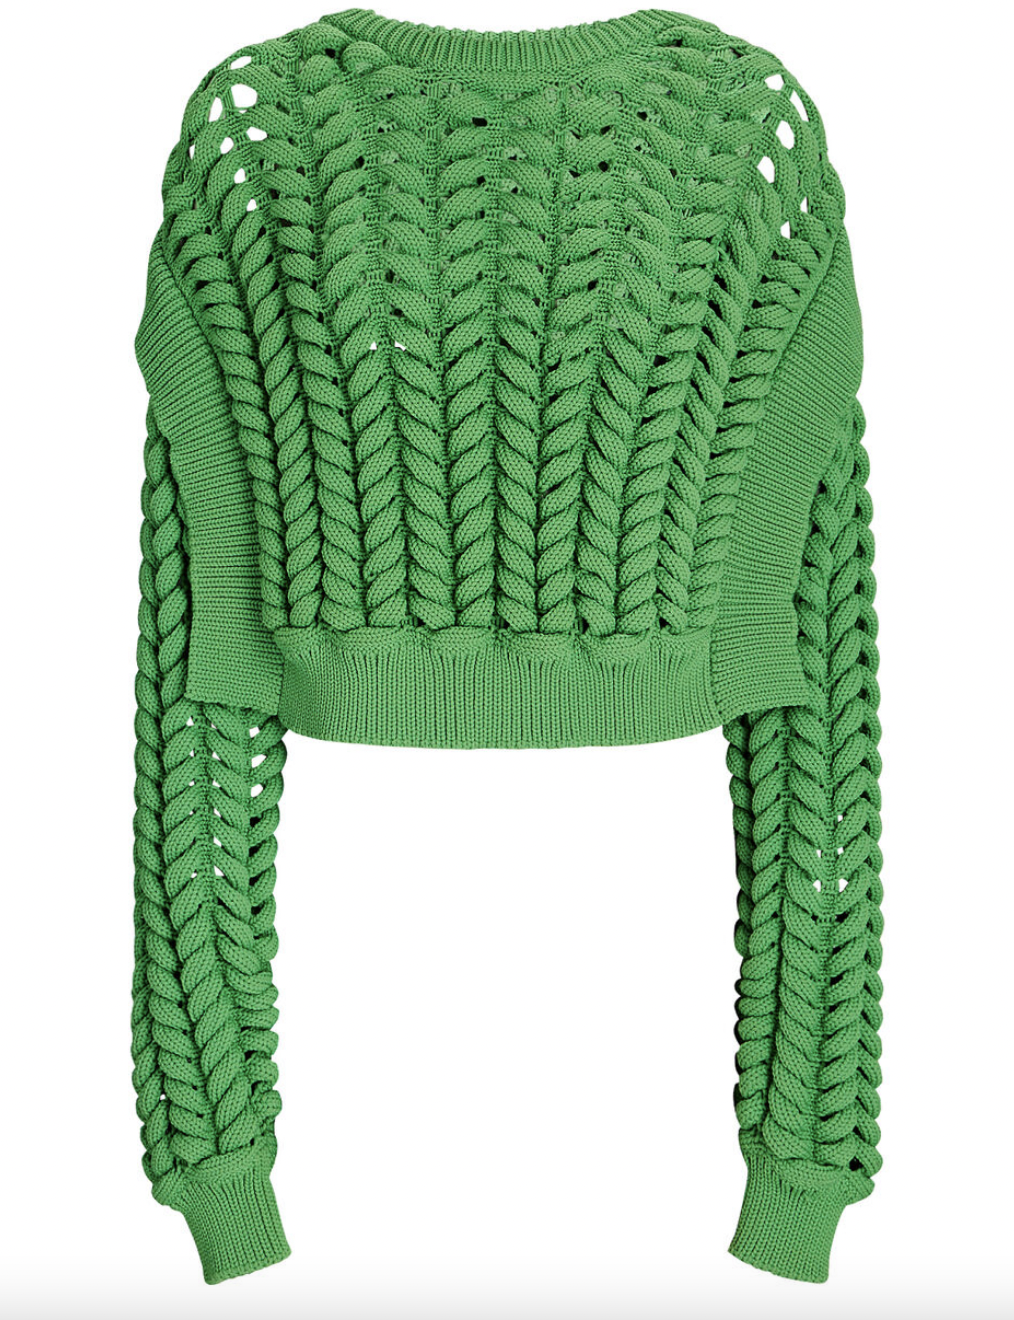 Sutton Stracke's Green Knit Sweater